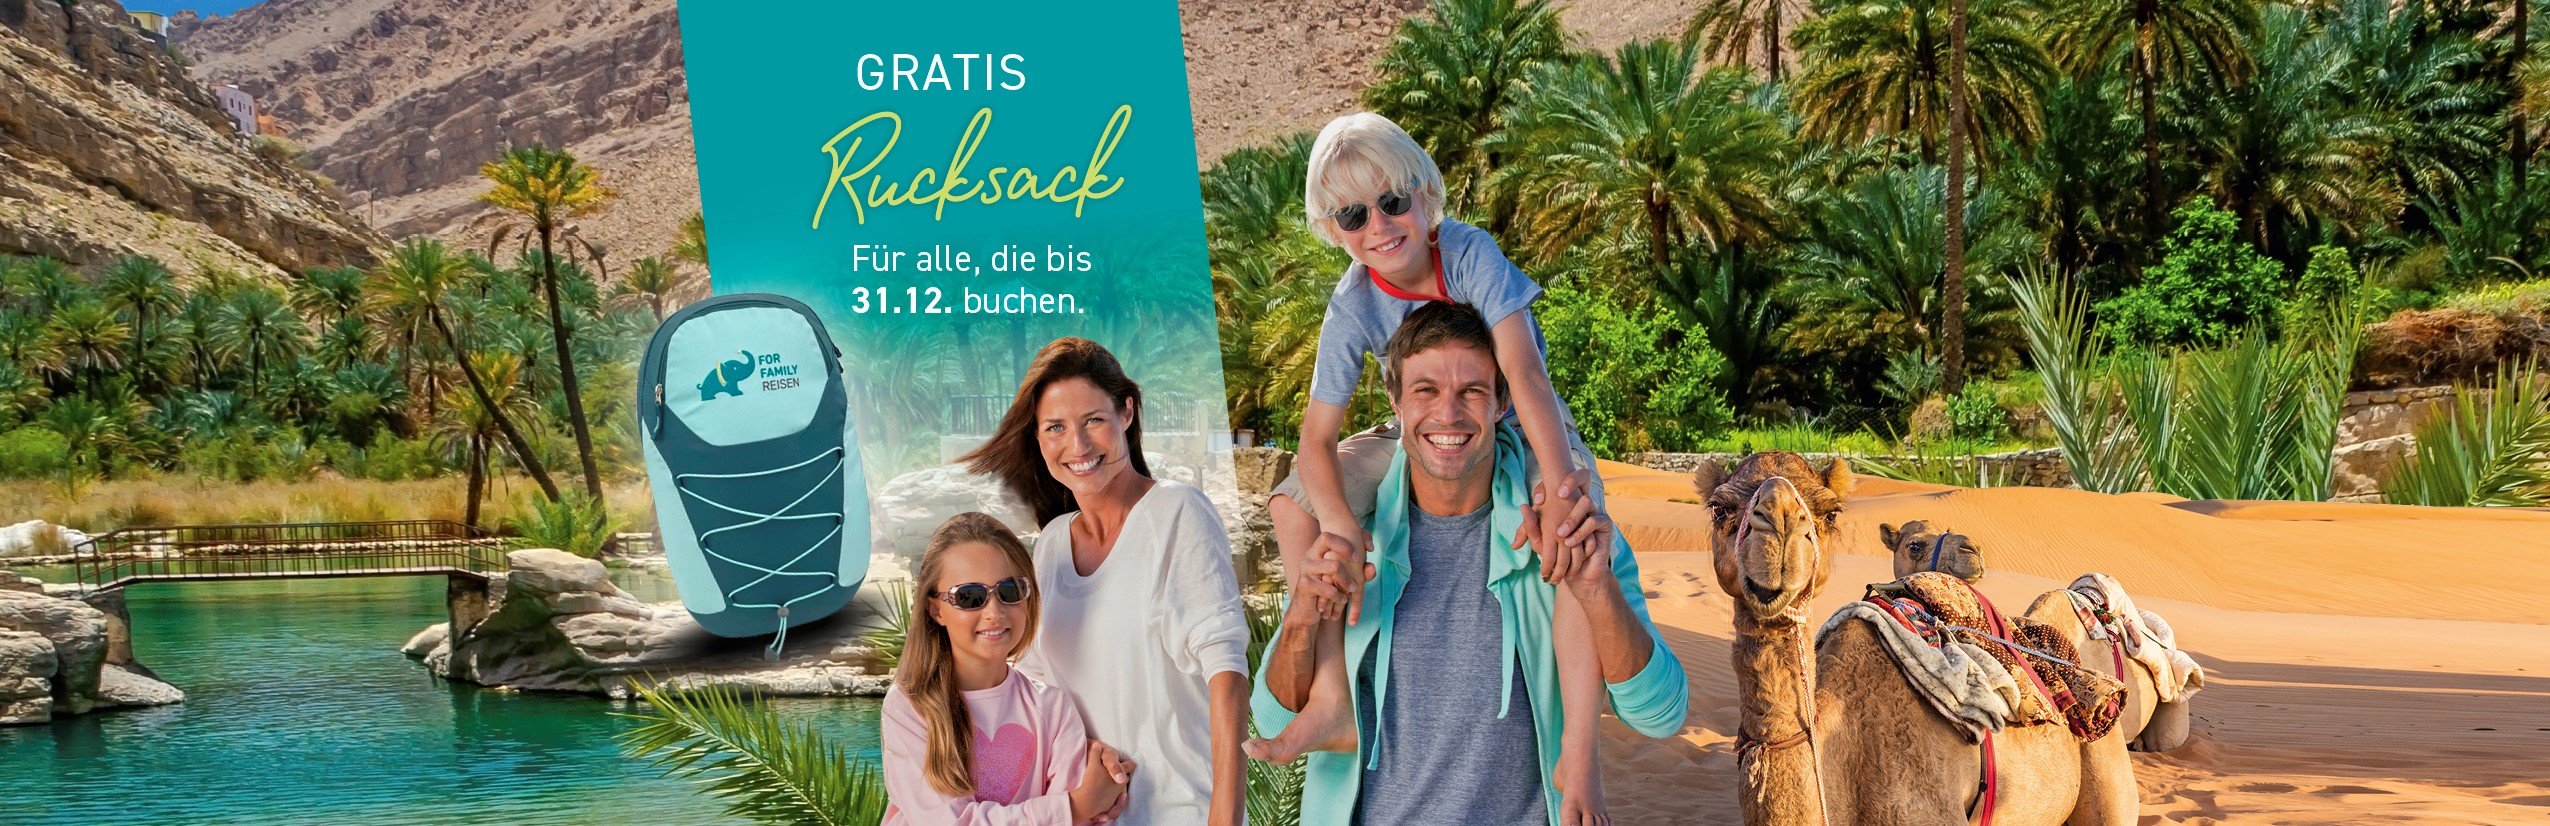 Familienreise mit Kindern - For Family Rucksack - Rucksack Aktion